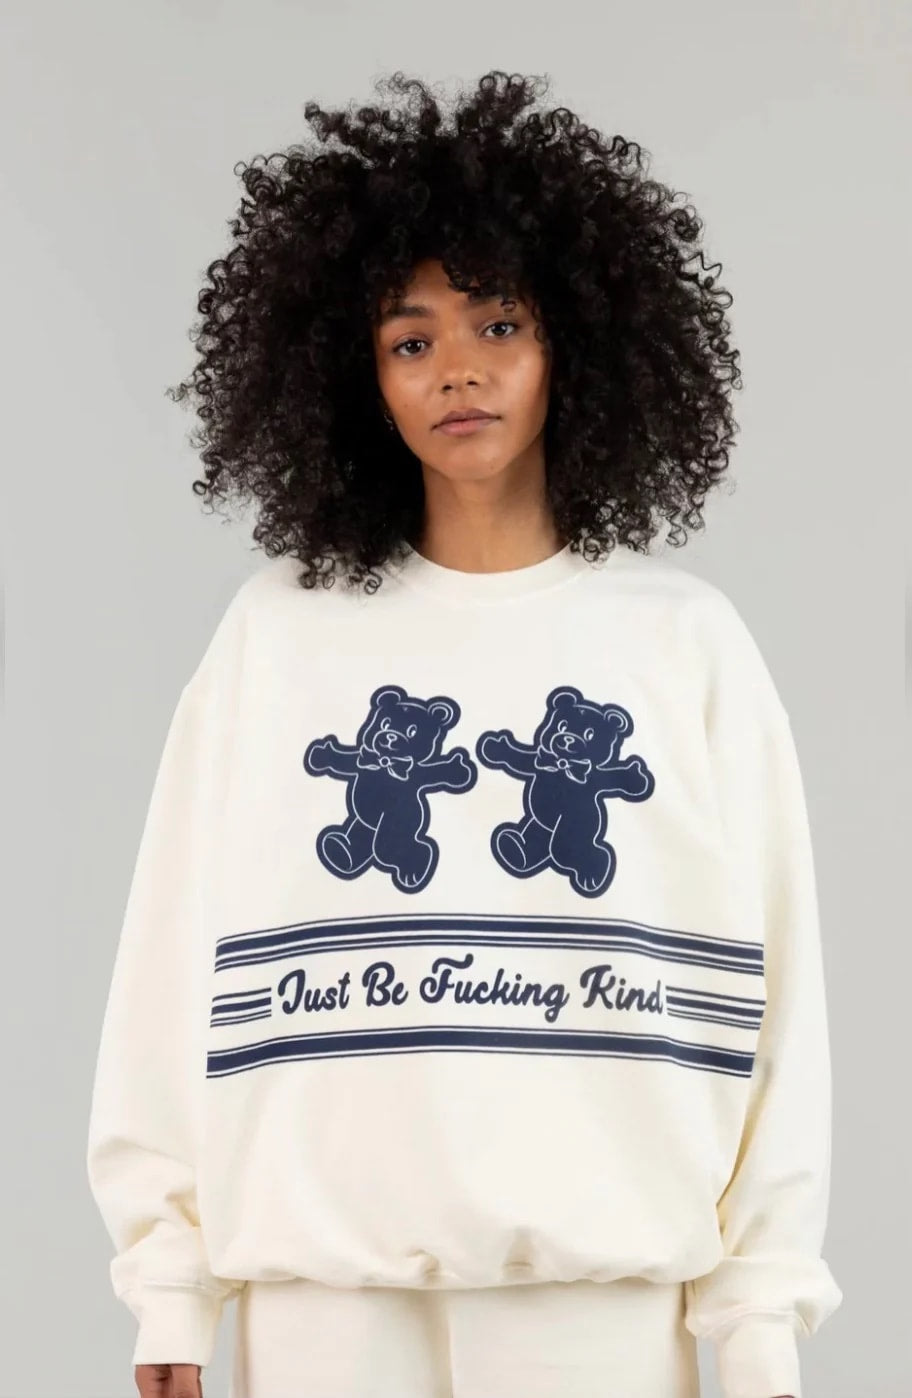 Just Be Fu*king Kind Sweatshirt